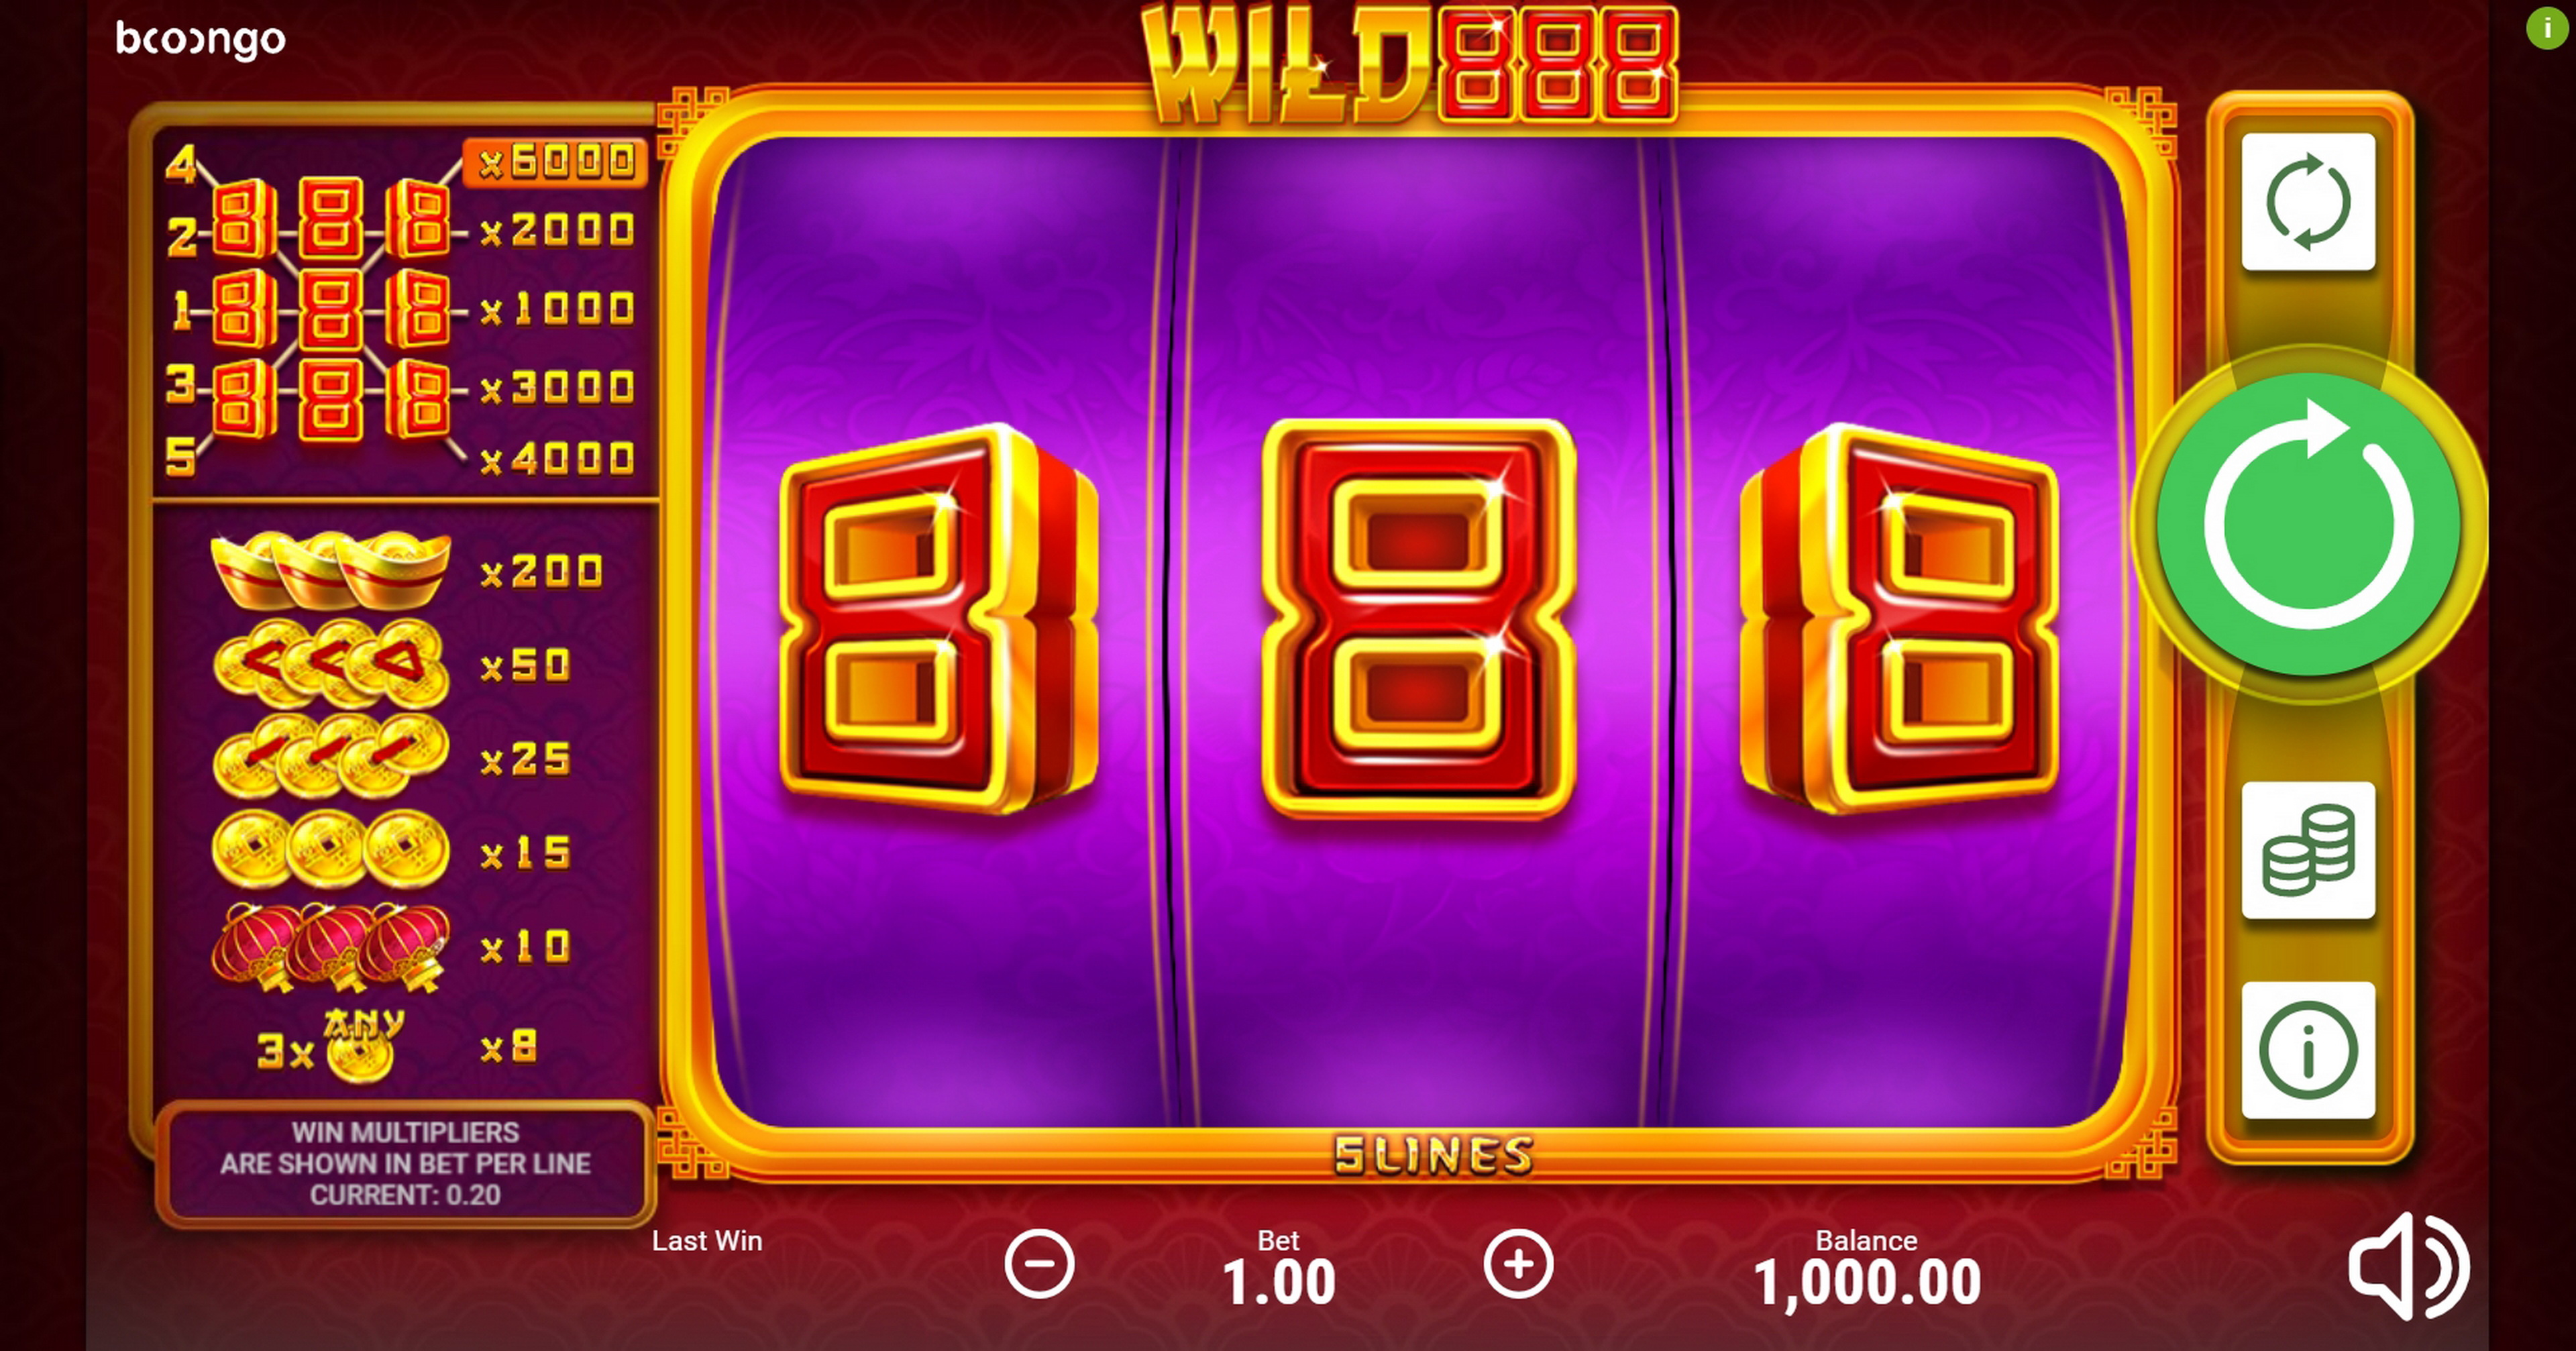 Reels in Wild 888 Slot Game by Booongo Gaming